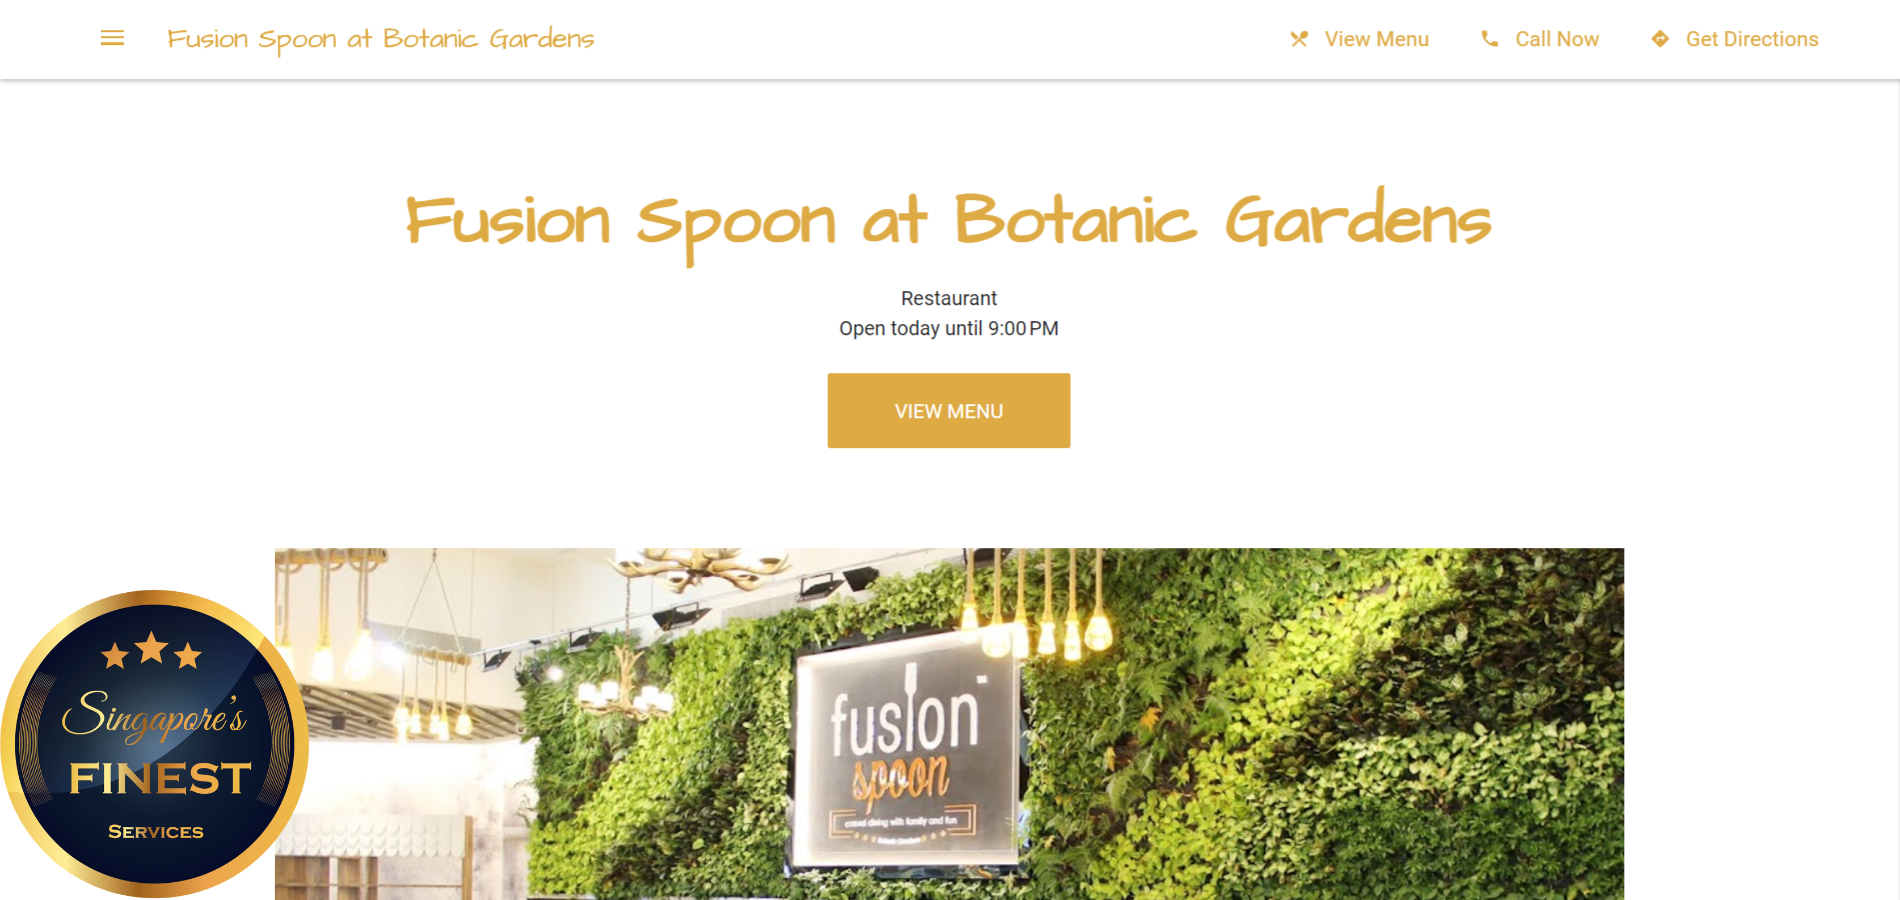 10 Best Botanic Gardens Restaurants in Singapore